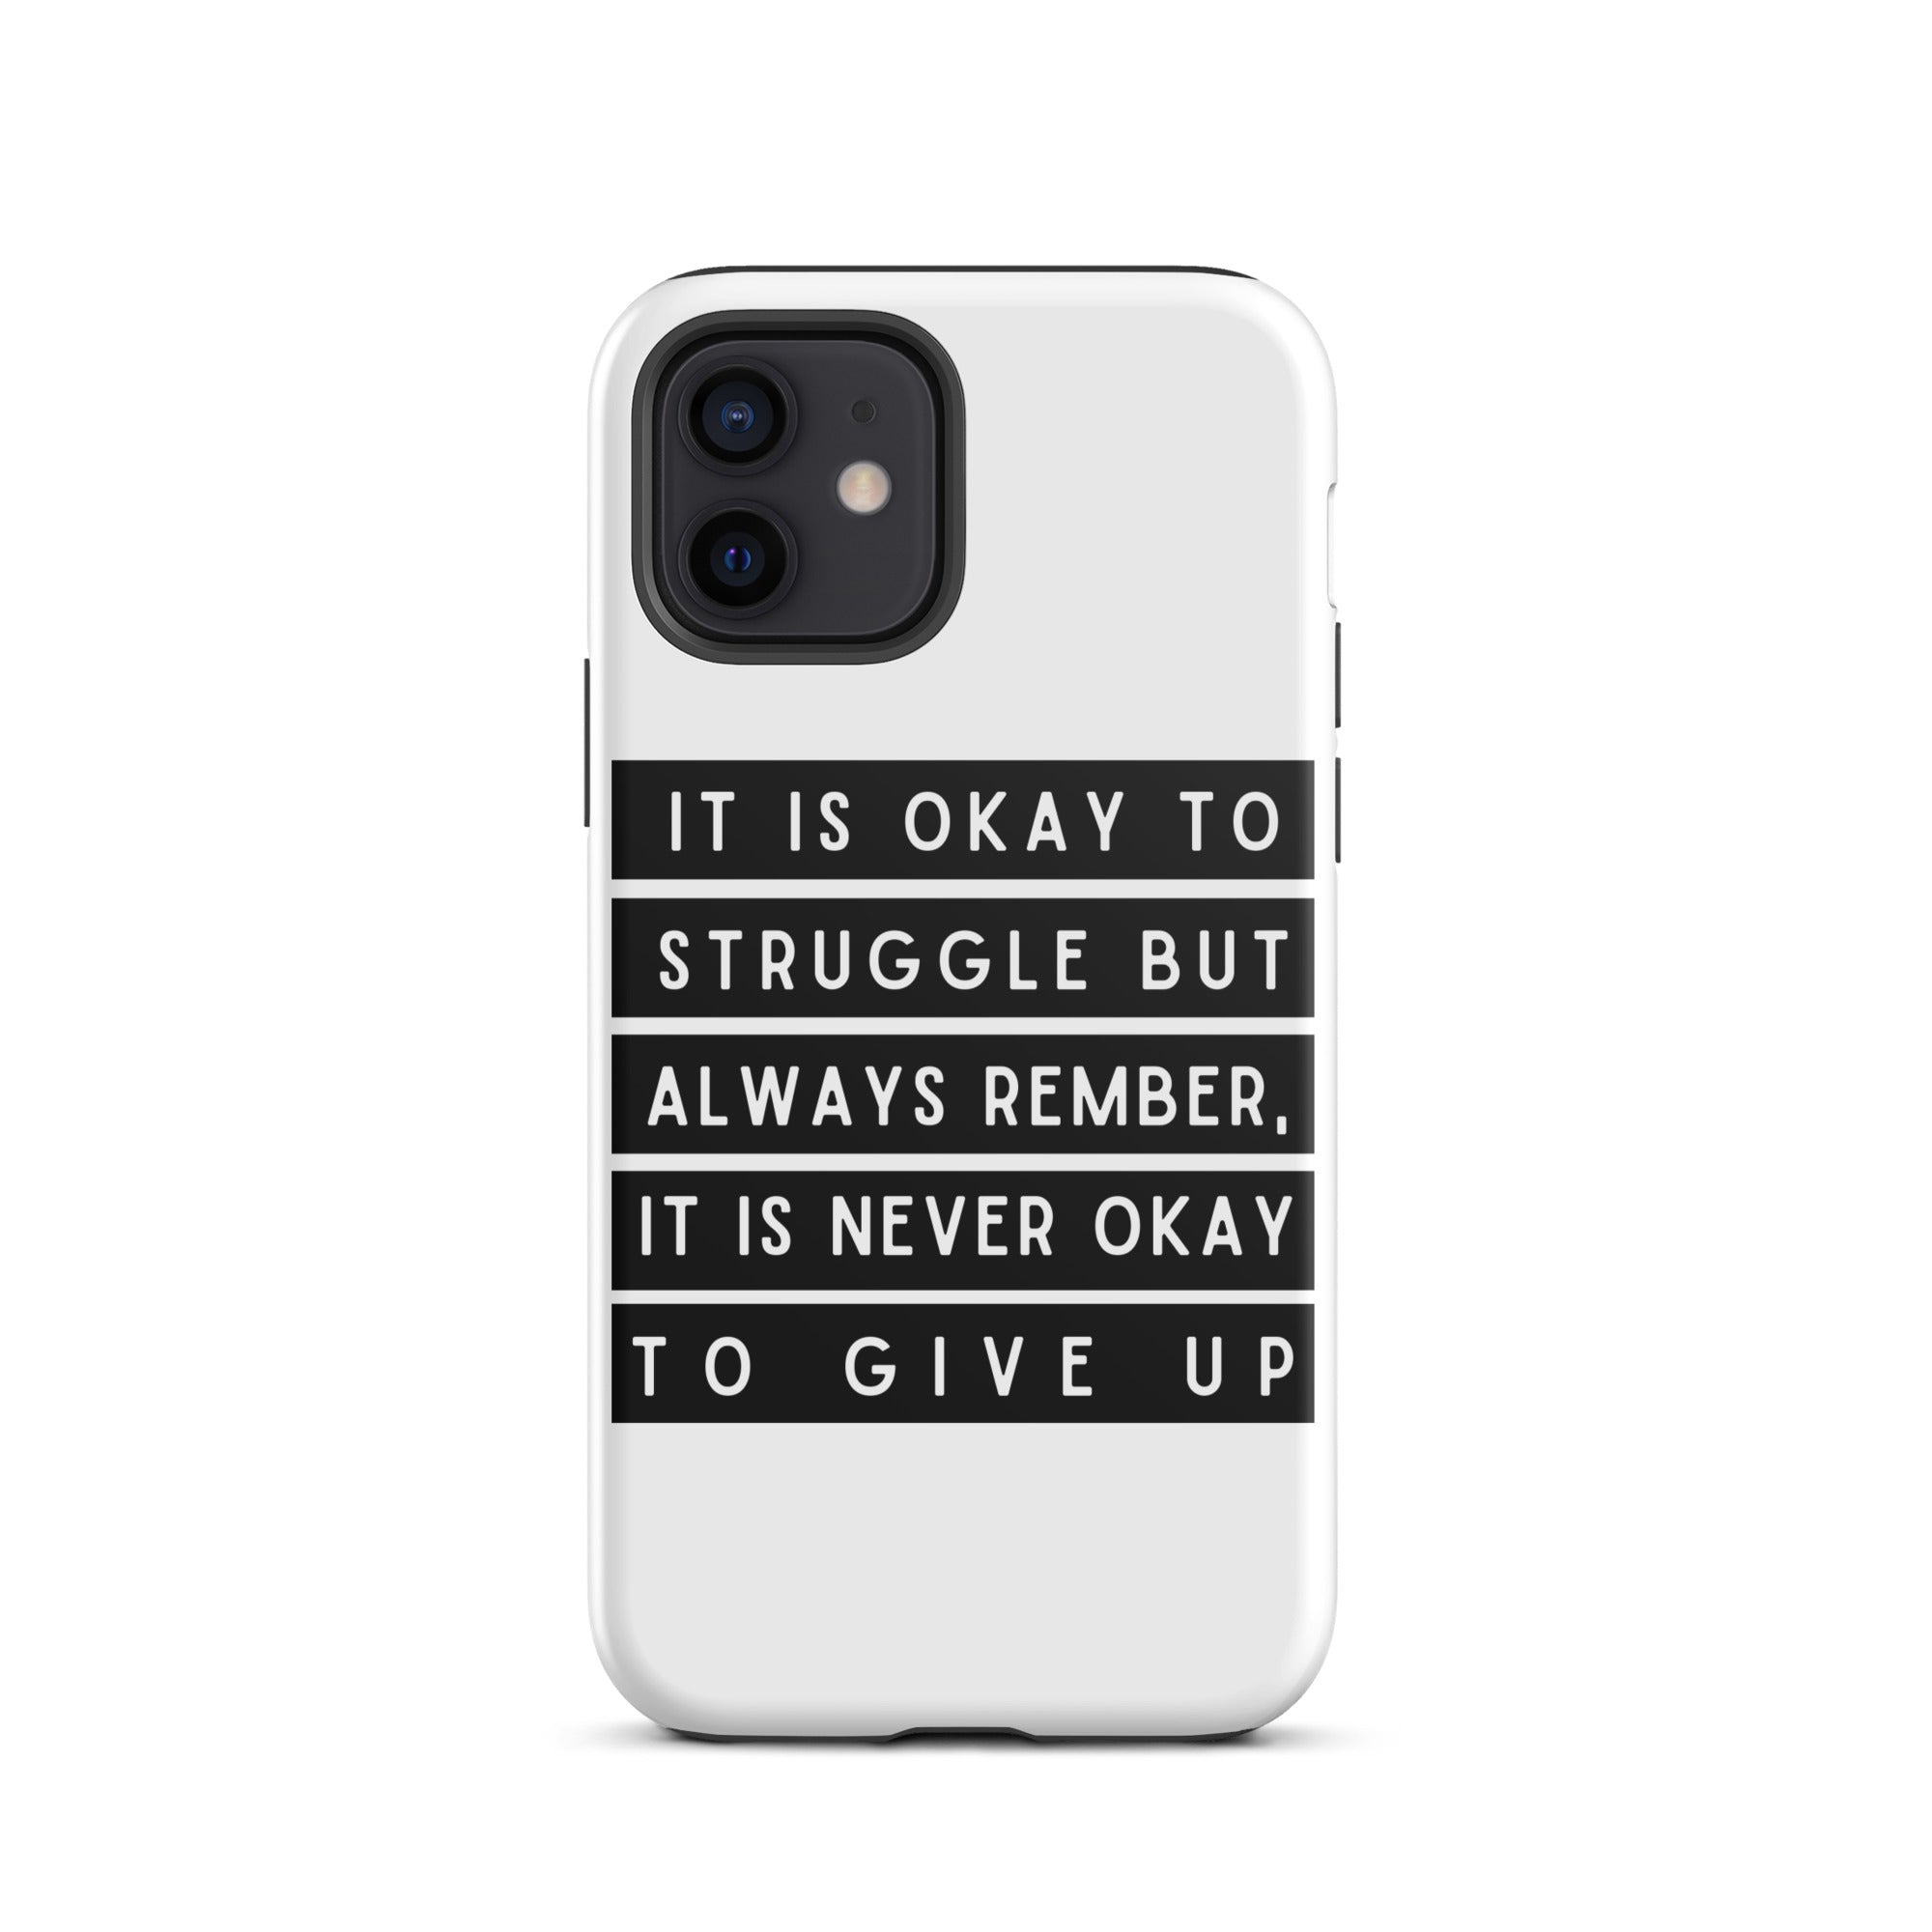 It's Okay To Struggle - Tough iPhone case